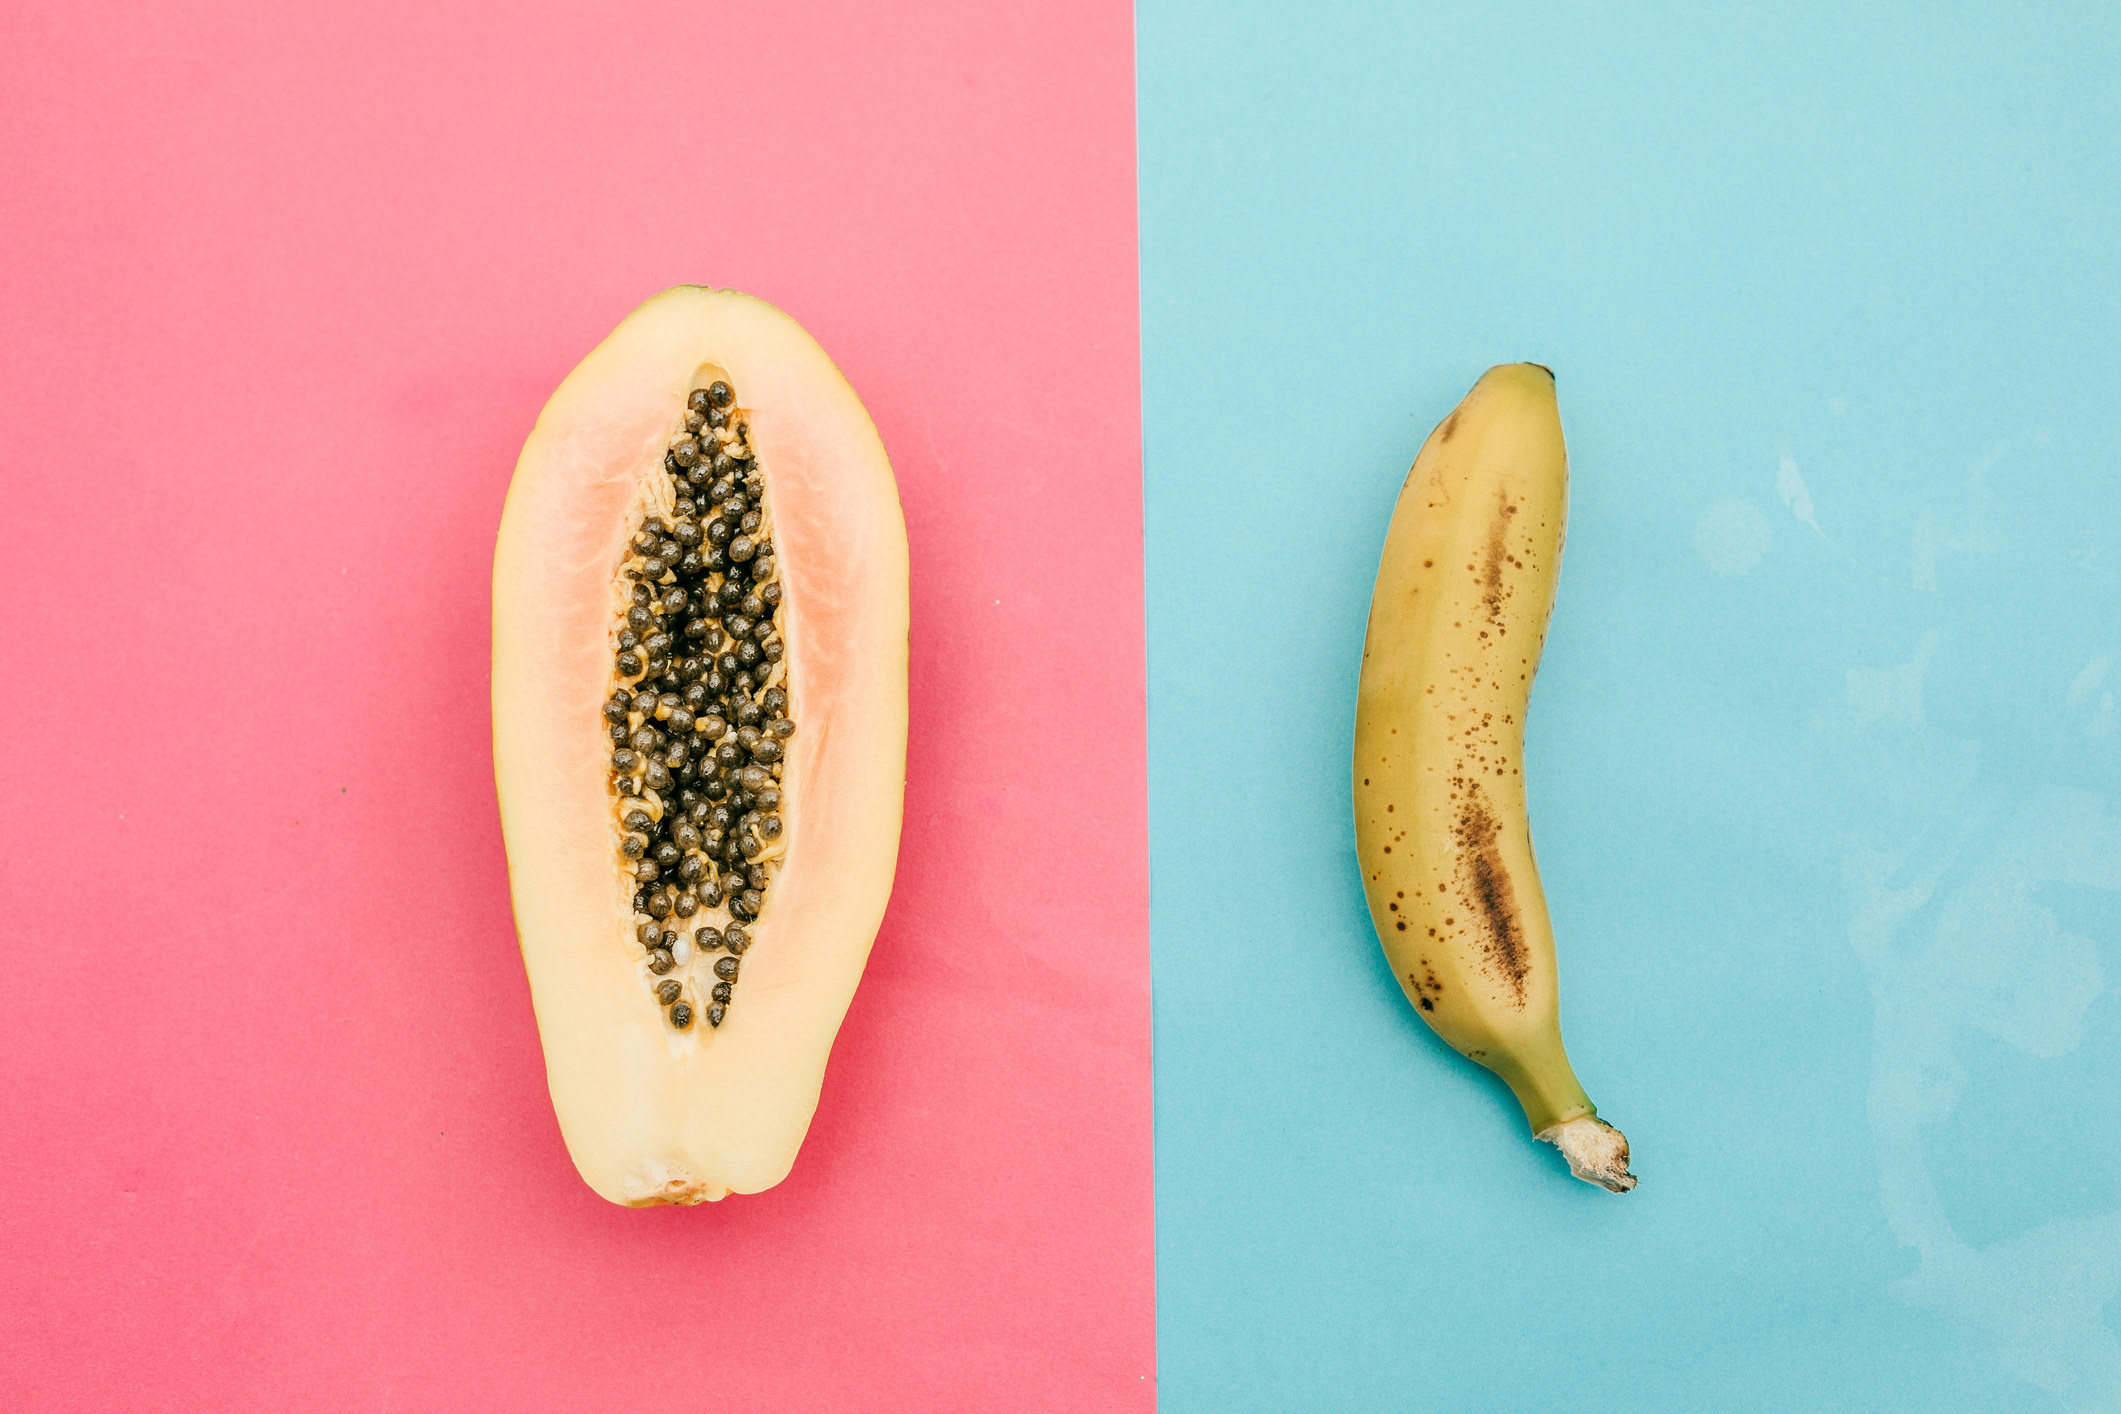 A side-by-side image of a papaya and a banana